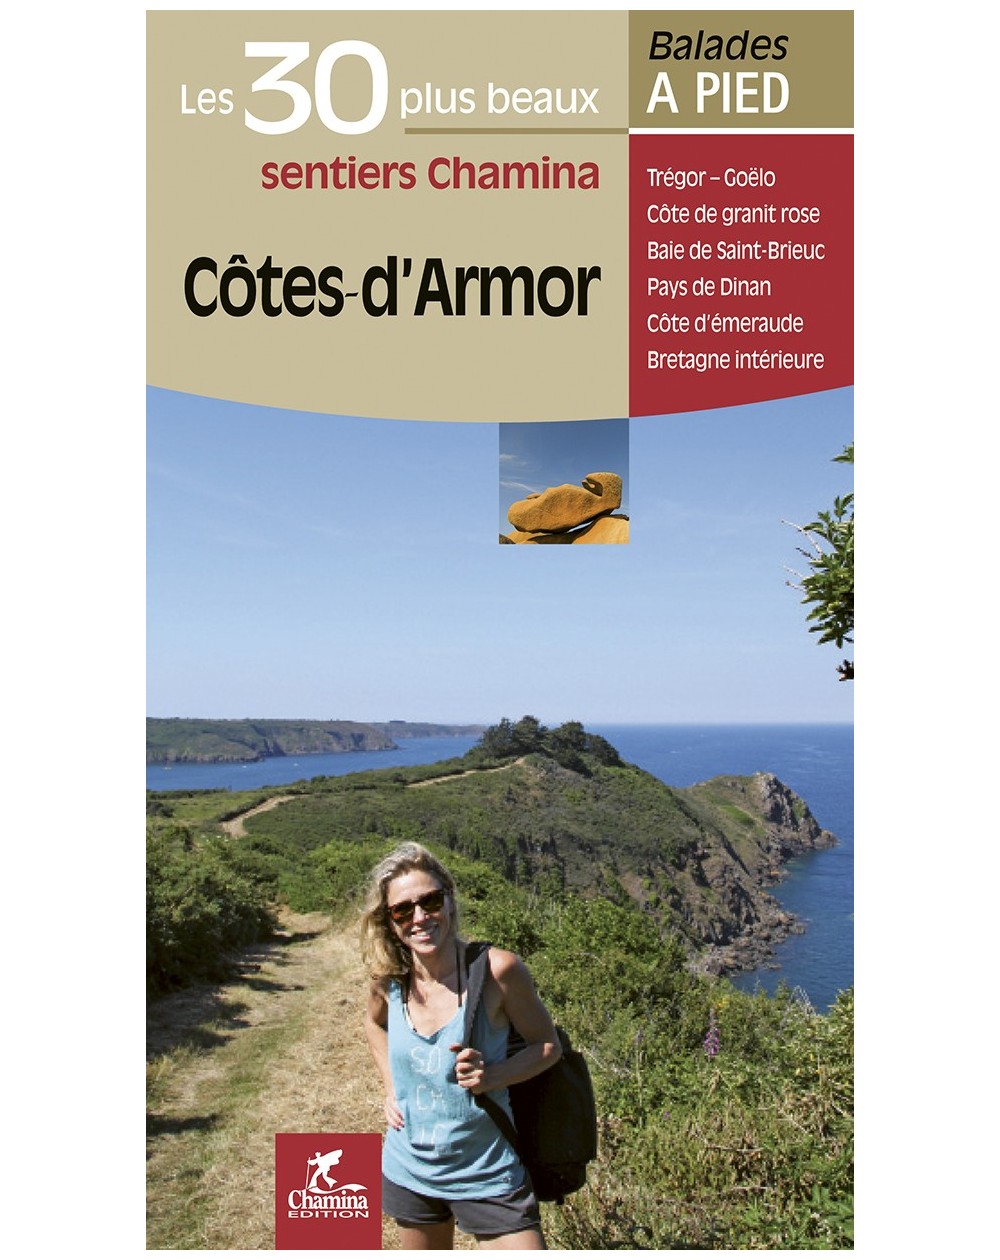 30-balades-randonnee-cote-d-armor-chamina-edition-9782844663542